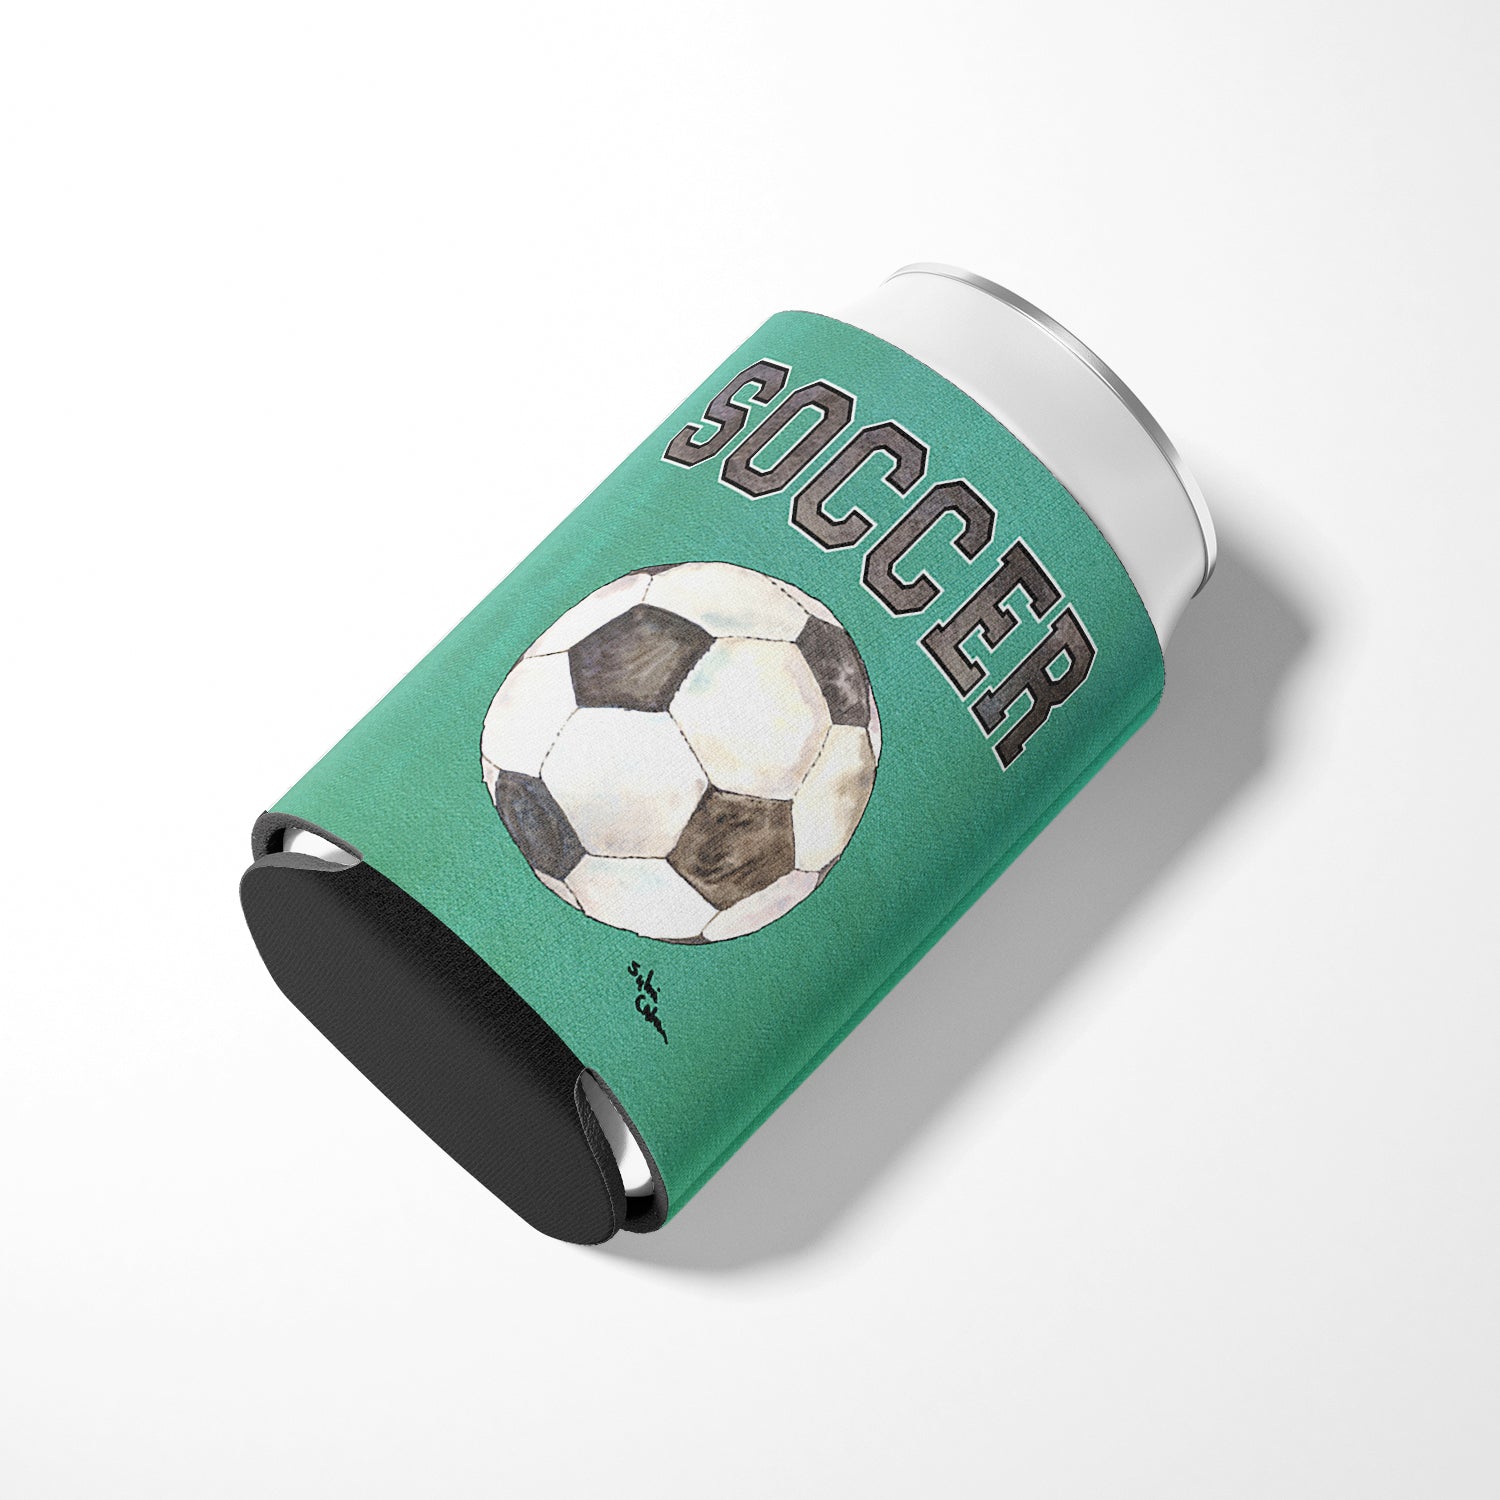 Soccer Can or Bottle Beverage Insulator Hugger.